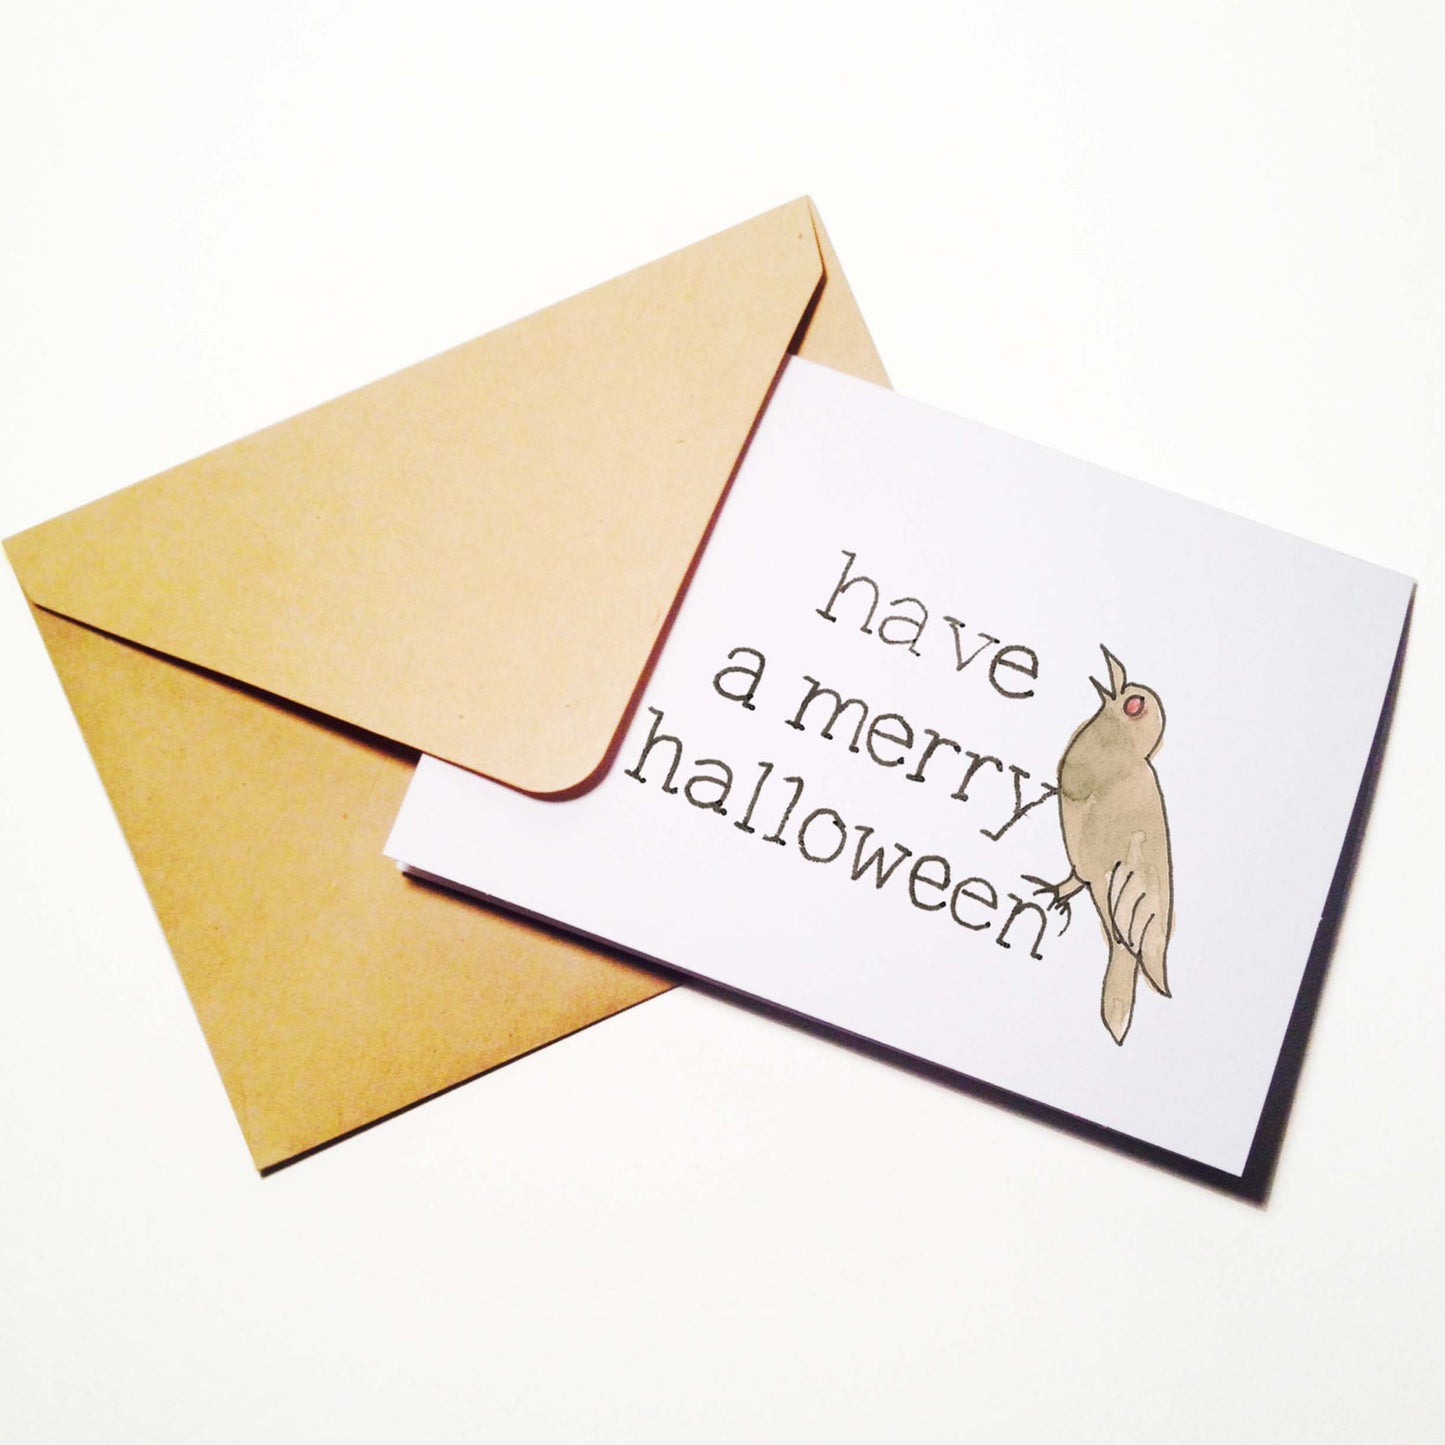 Merry Halloween Card